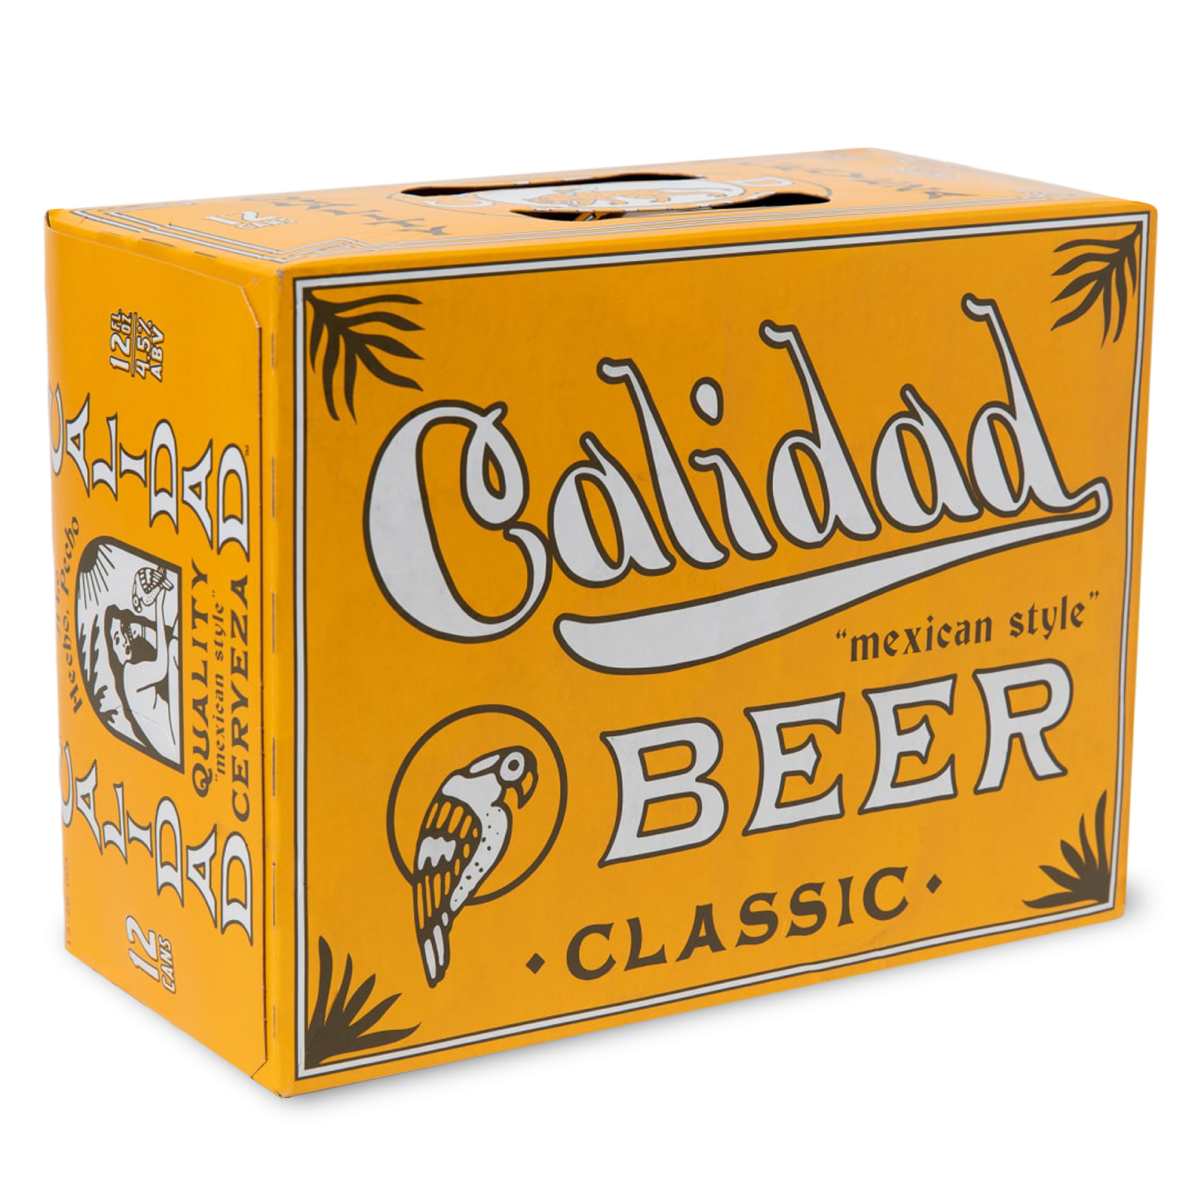 Calidad Beer "Classic" 12-Pack